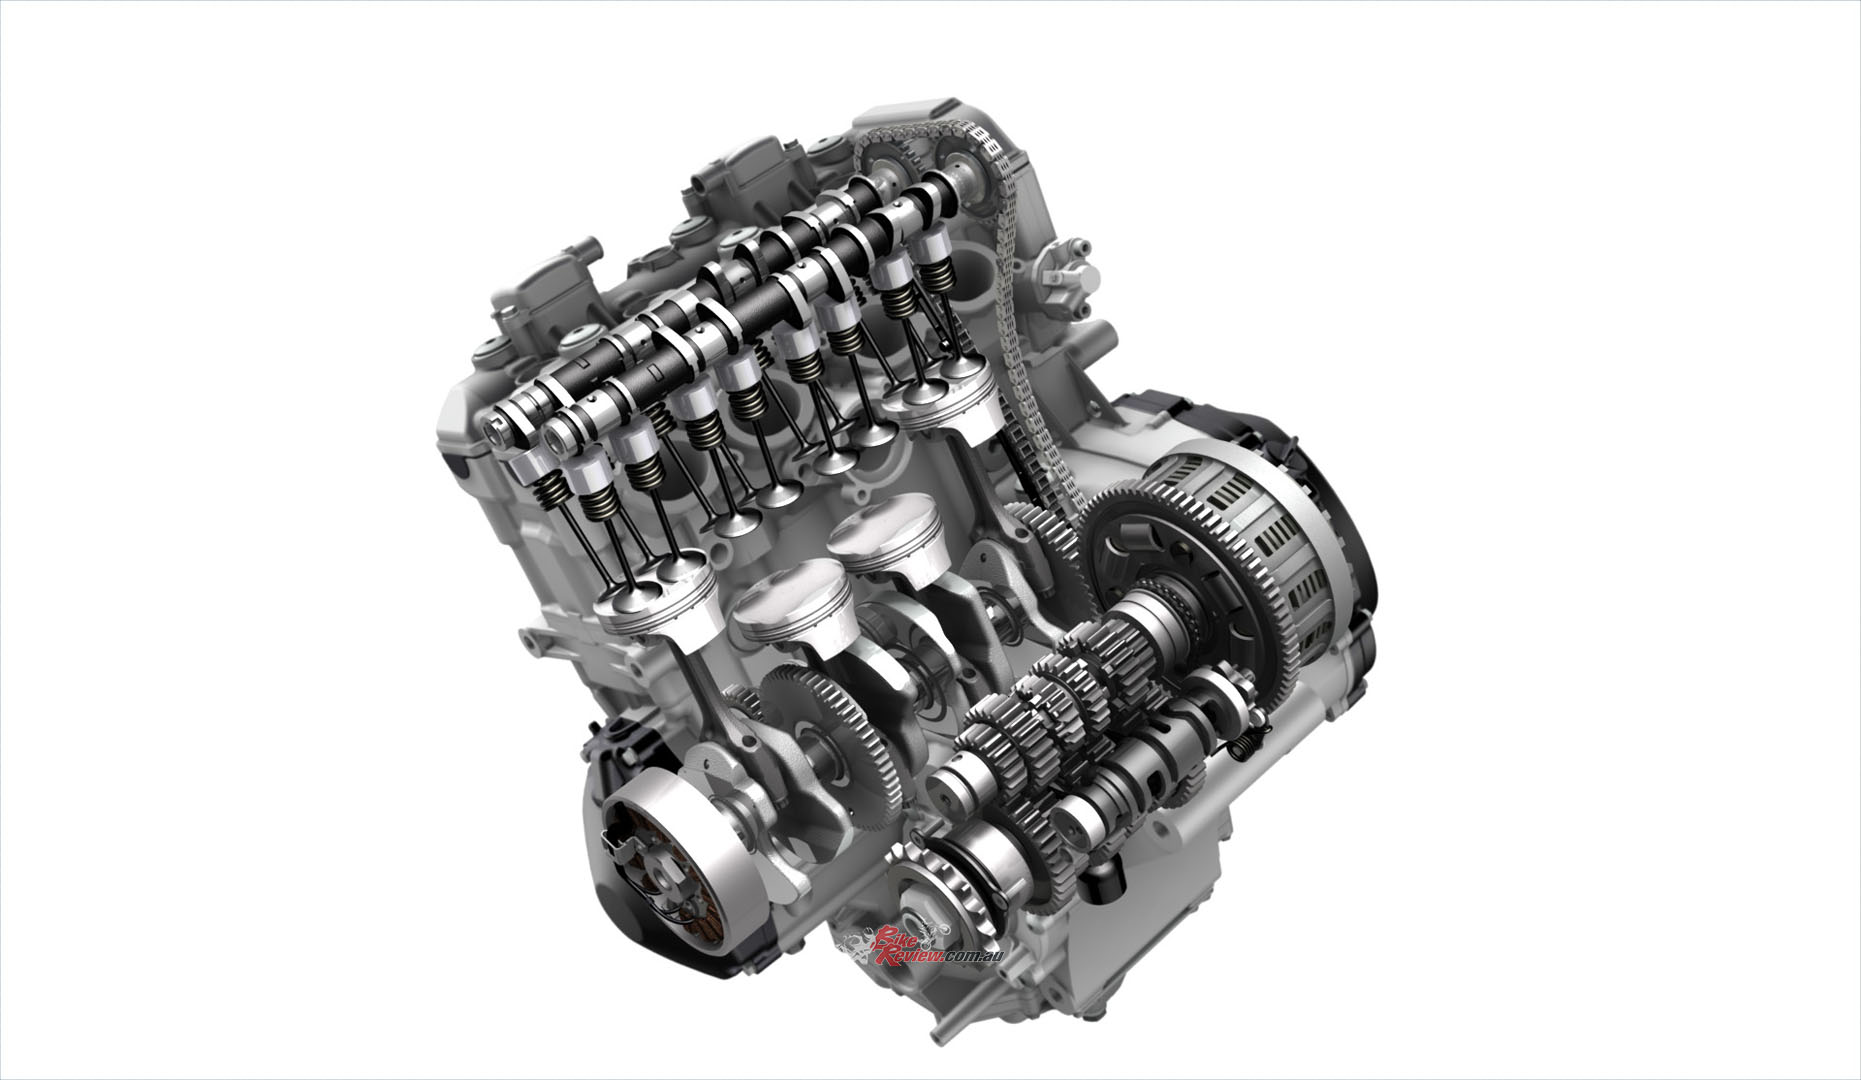 The 2012 GSX-R1000 engine had FEM (finite element method) pistons developed in MotoGP.